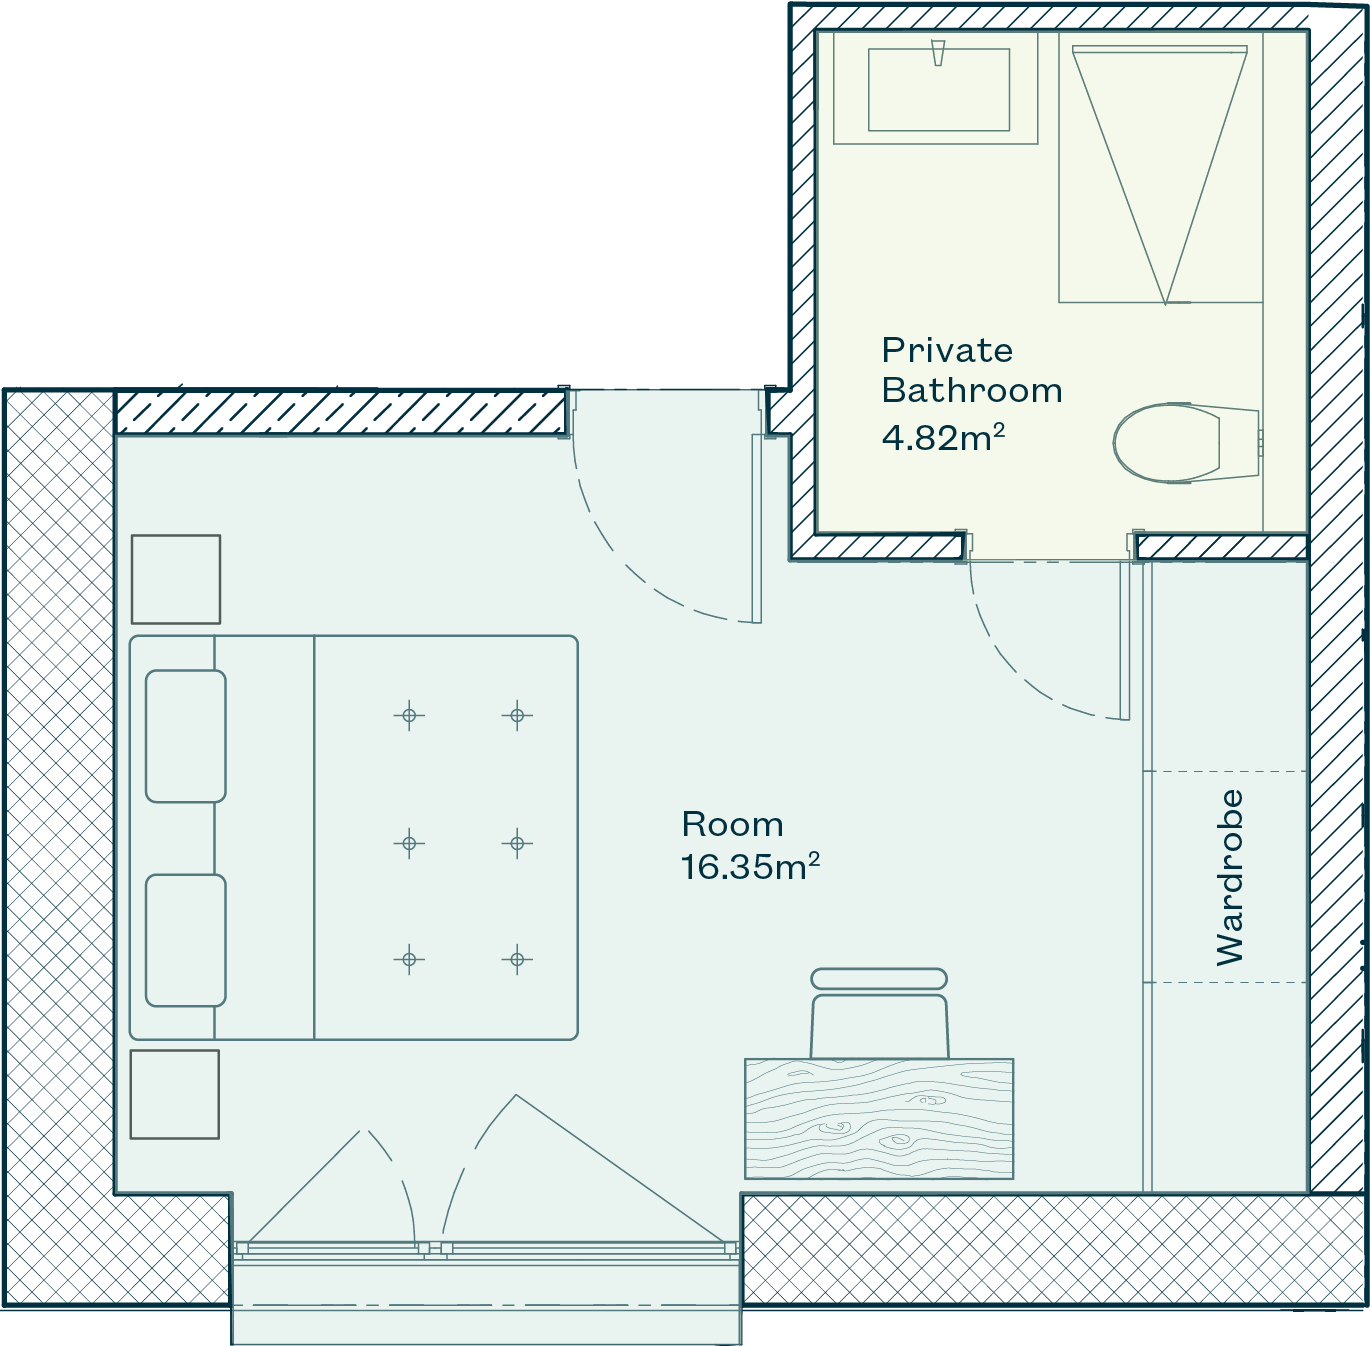 Image of a floorplan